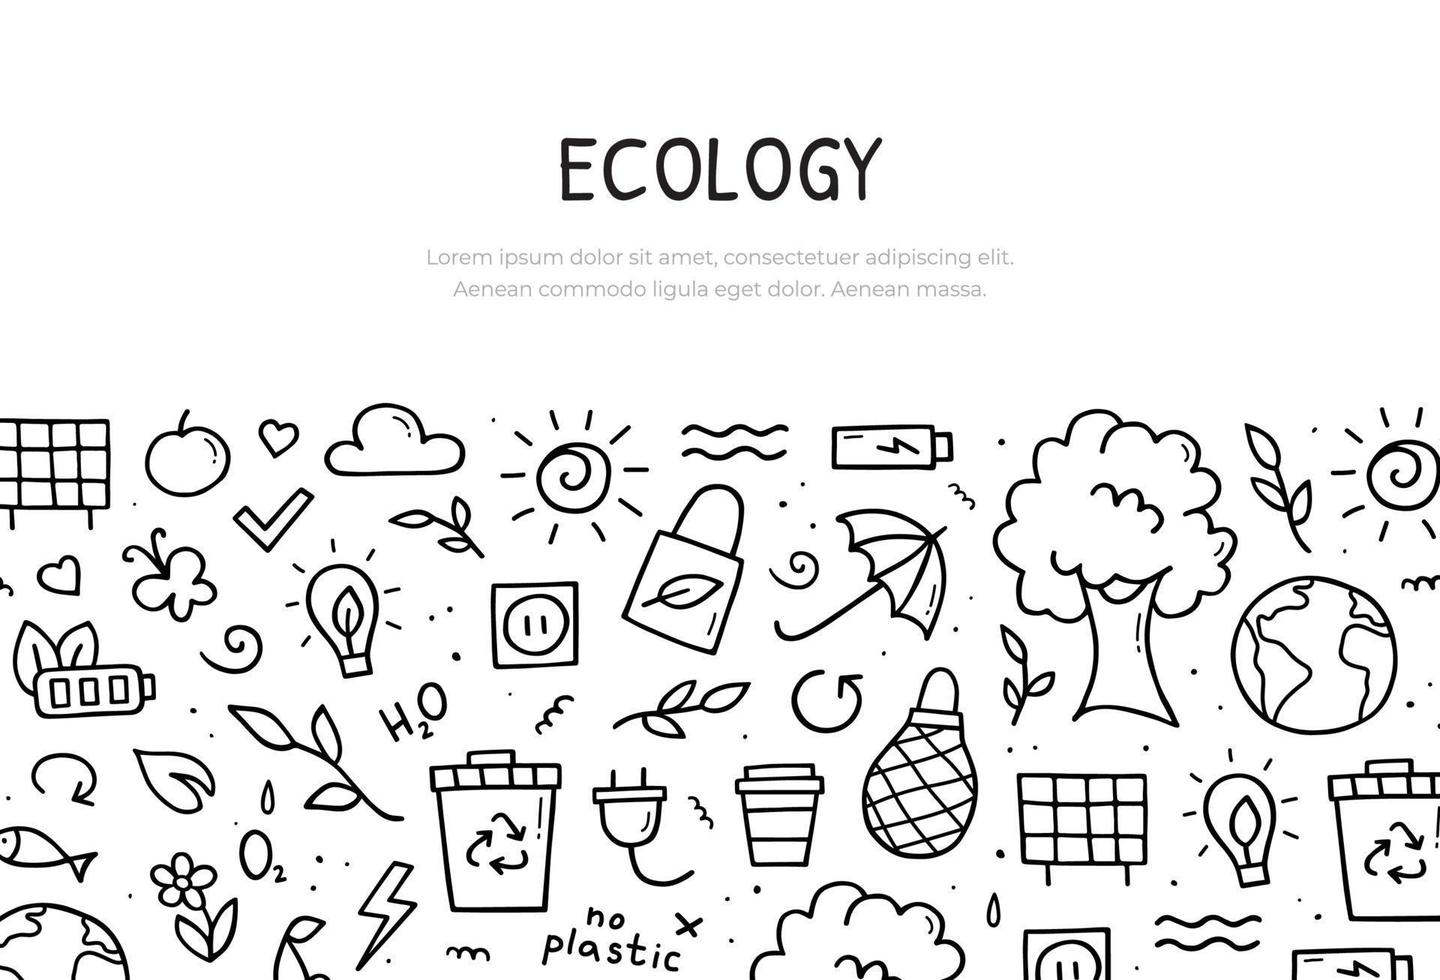 doodle uppsättning av ekologi. banner mall. eko i handritad stil. vektor illustration.